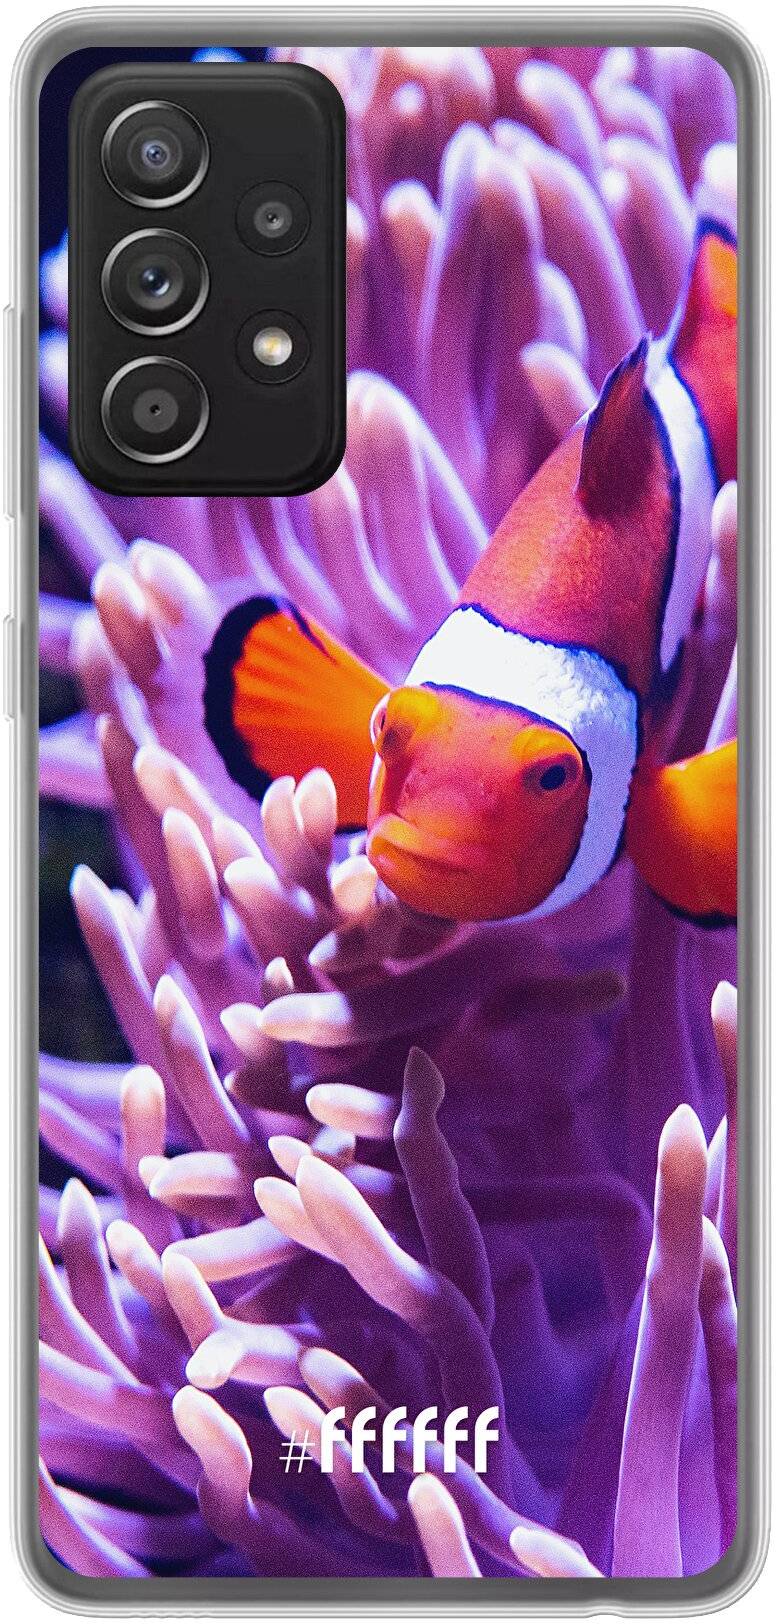 Nemo Galaxy A52